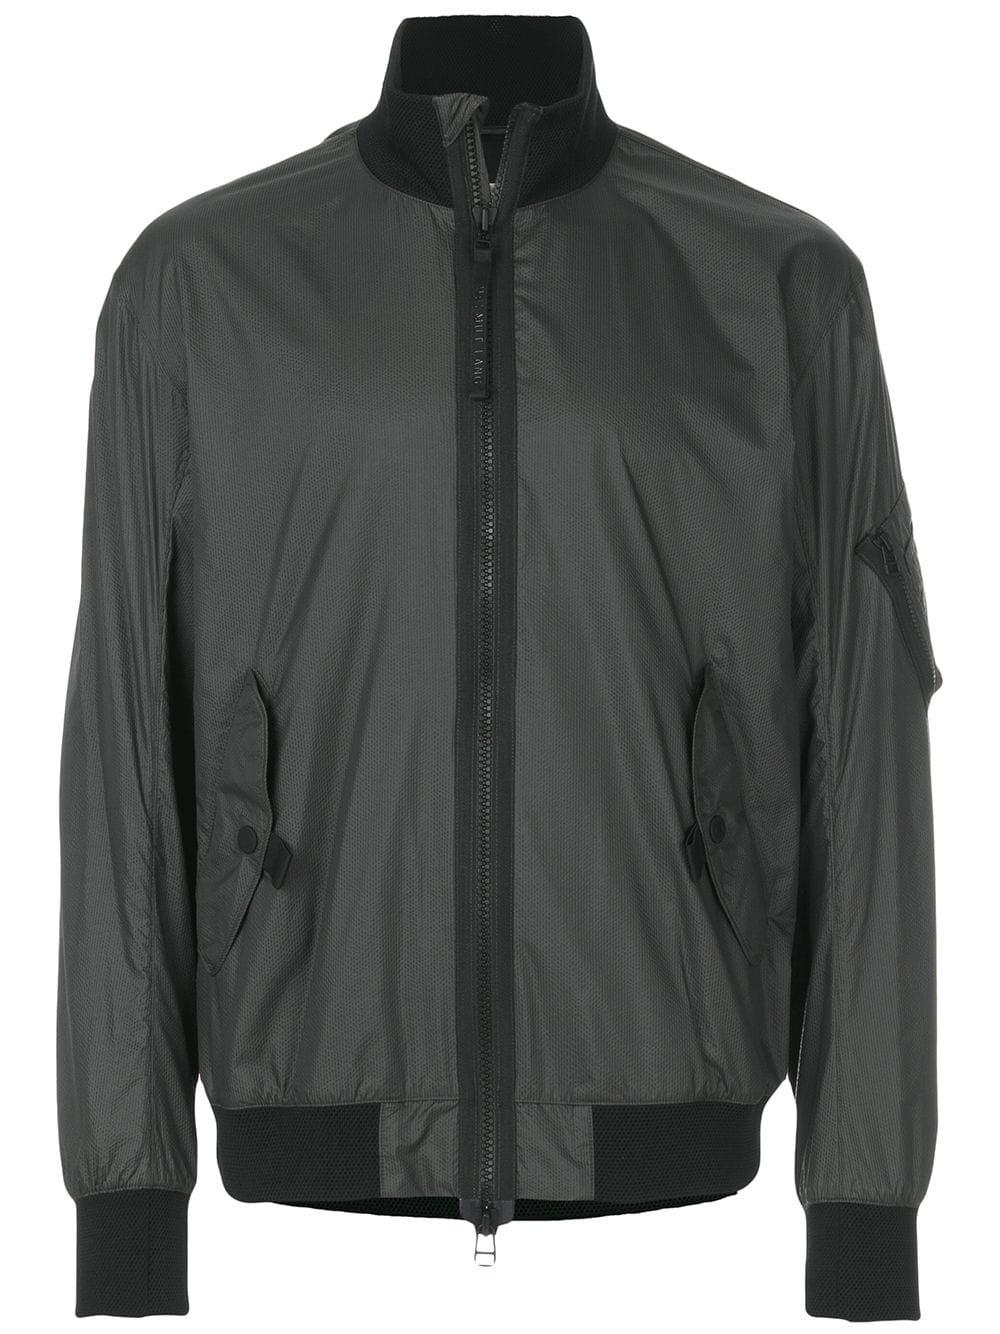 Helmut Lang Synthetic Zipped Bomber Jacket in Black for Men - Lyst